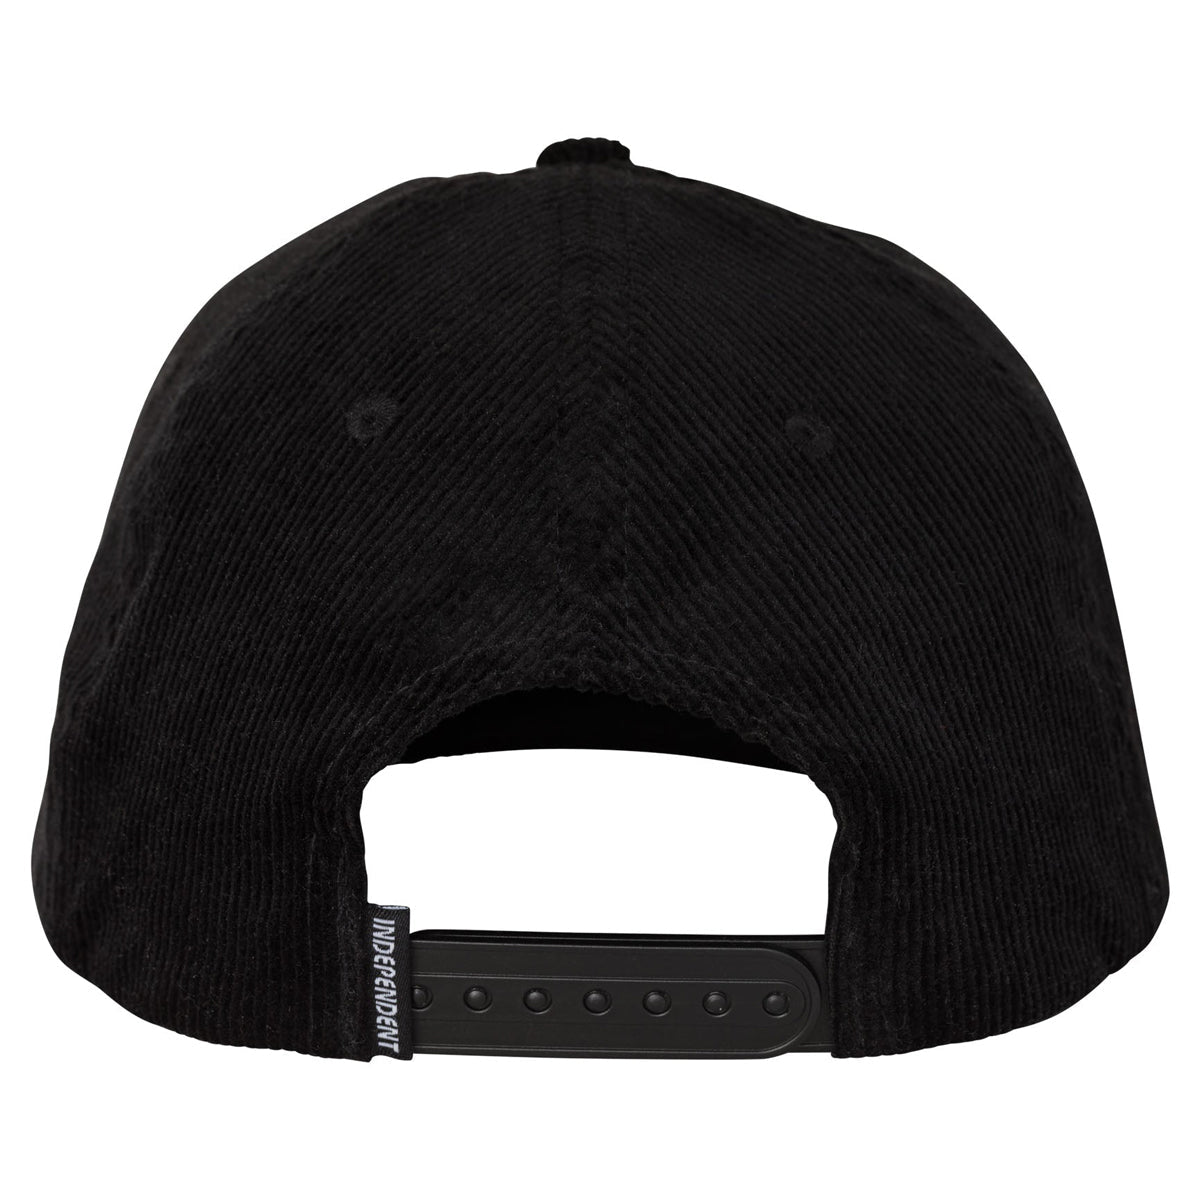 Independent Beacon Snapback Mid Profile Hat - Black image 2